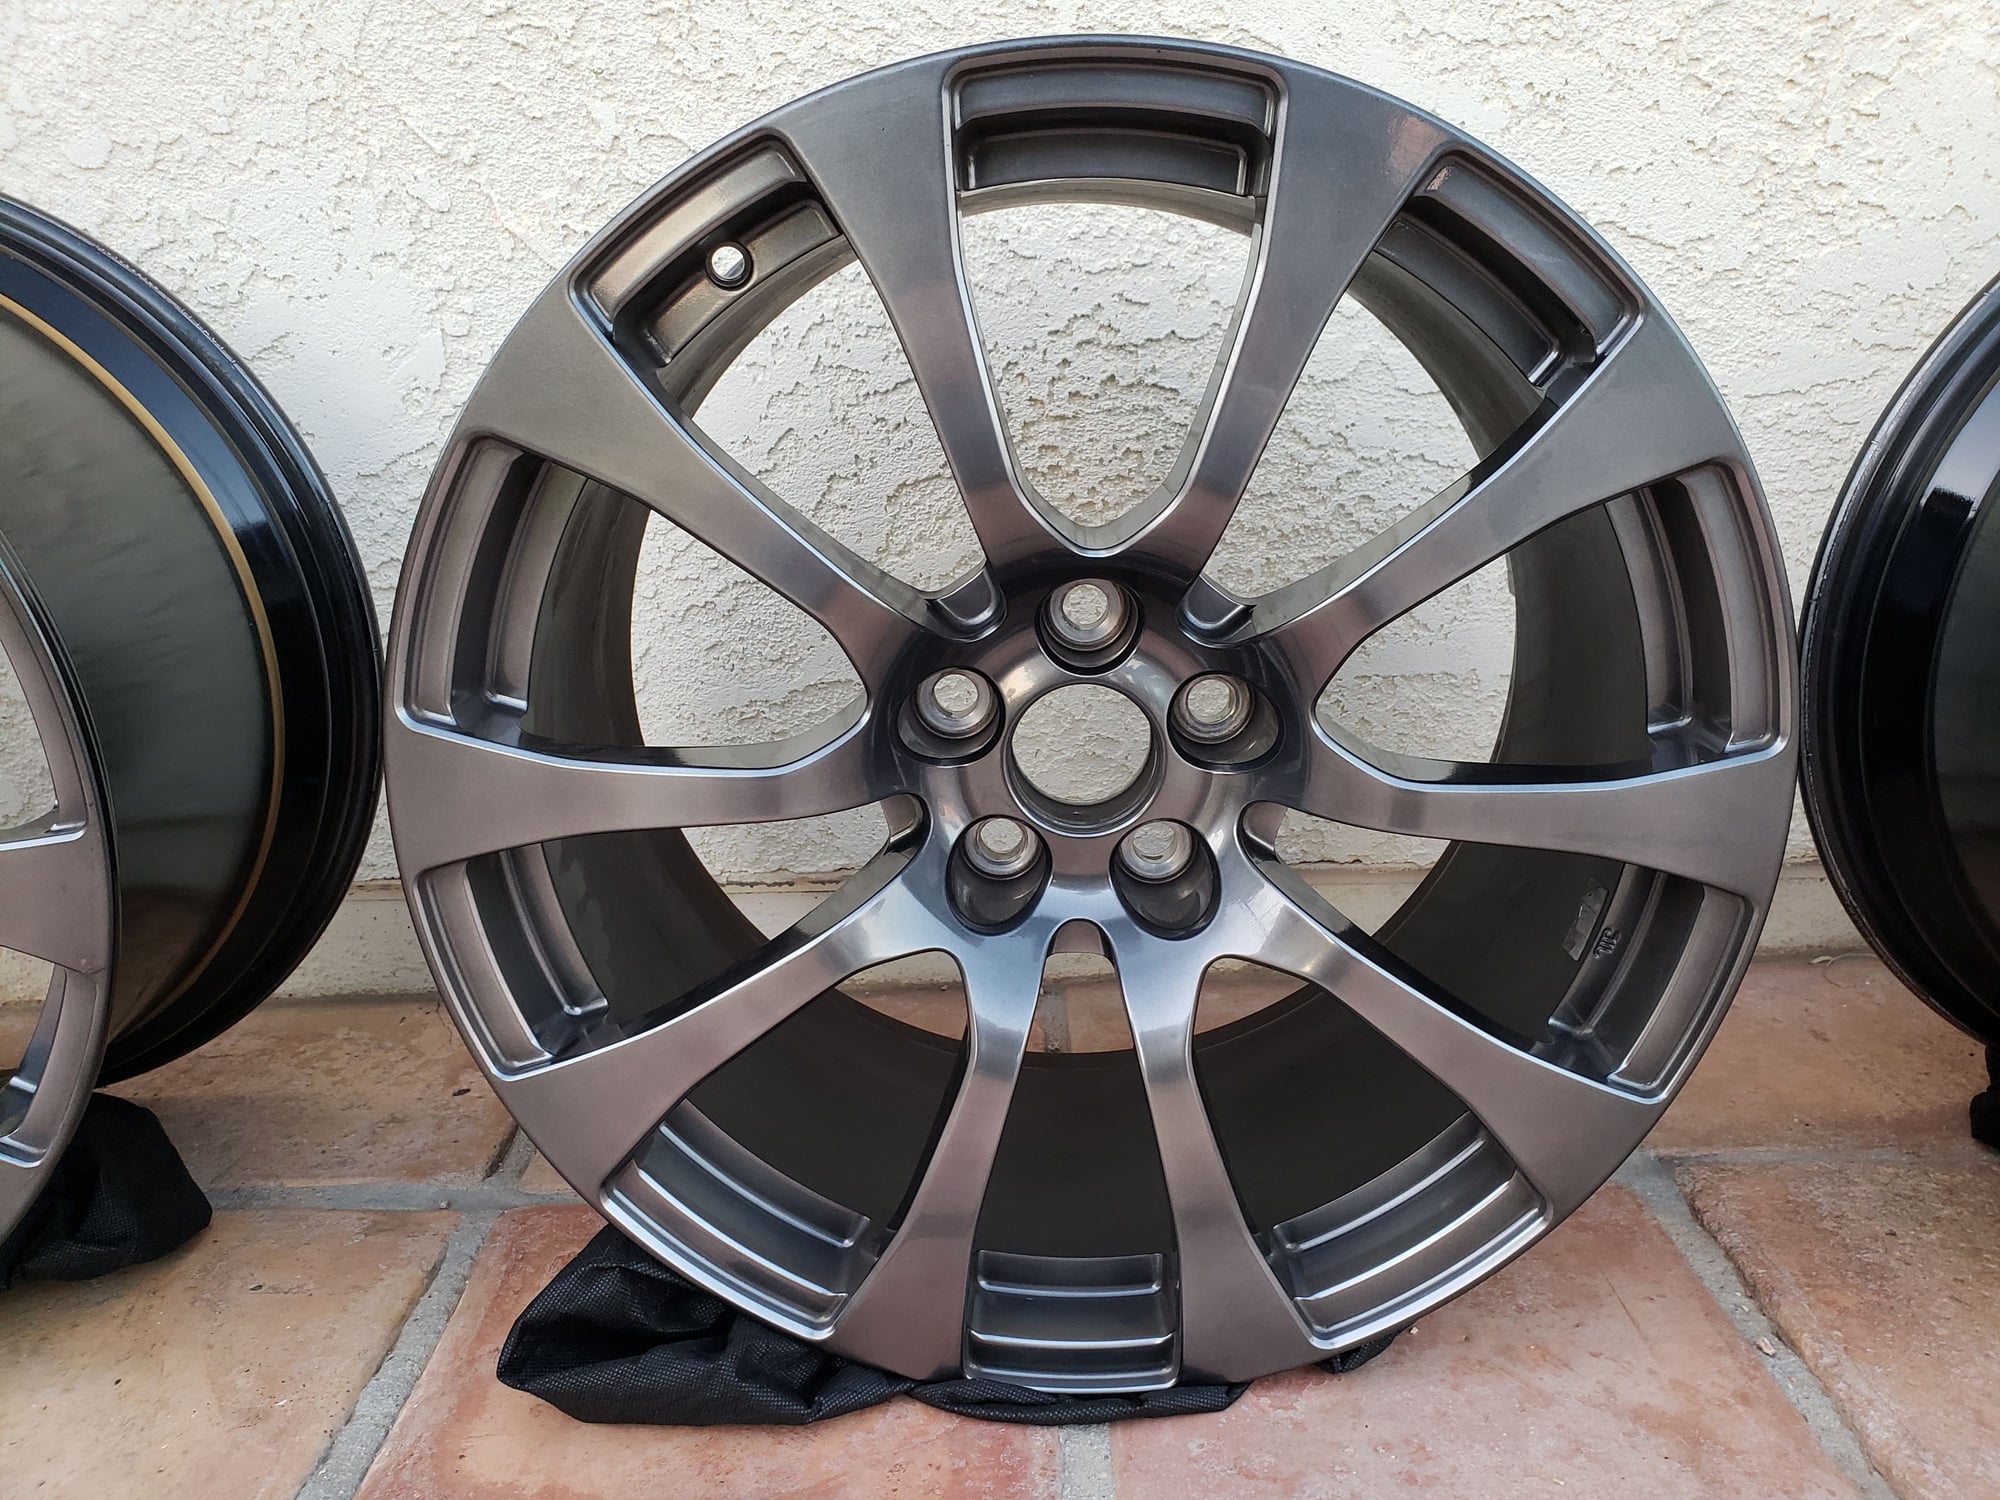 Wheels and Tires/Axles - Lexus RC F OEM 19" wheels - Used - Temecula, CA 92592, United States